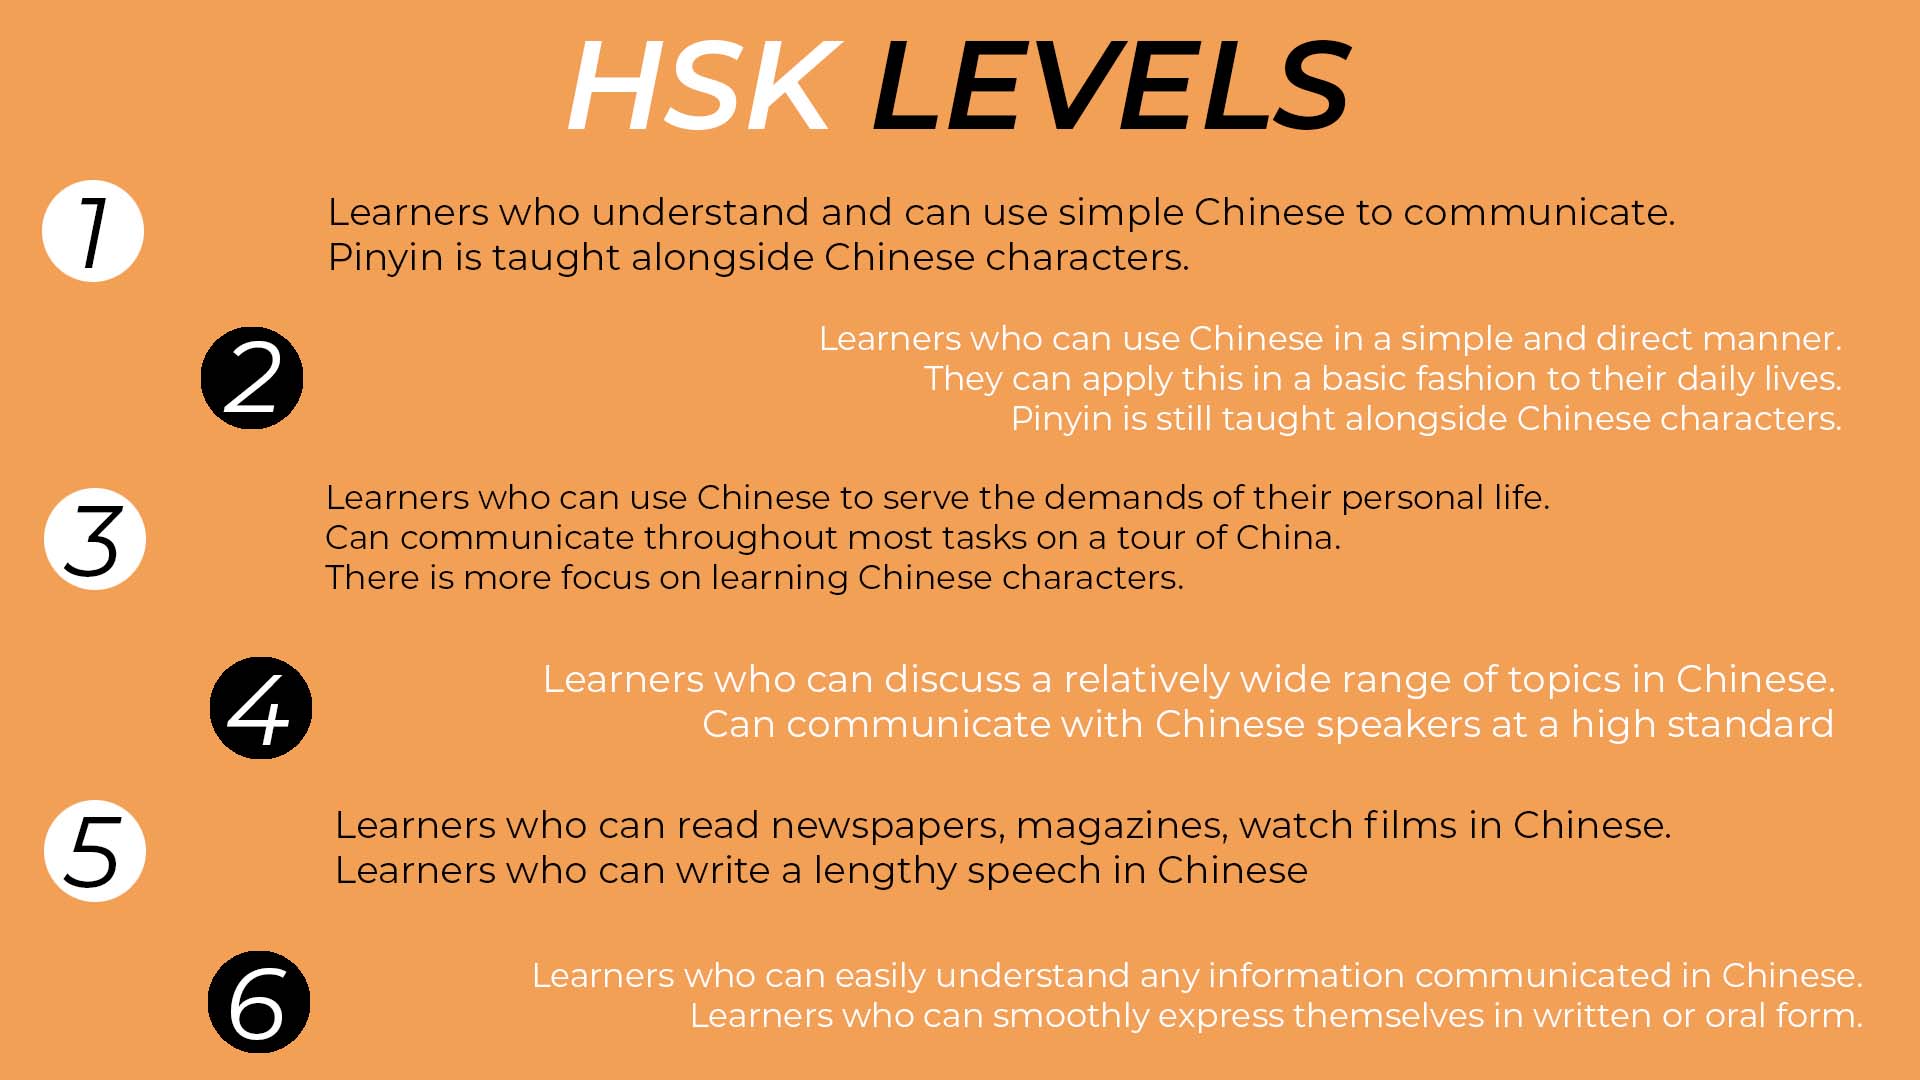 A breakdown of each of the HSK levels